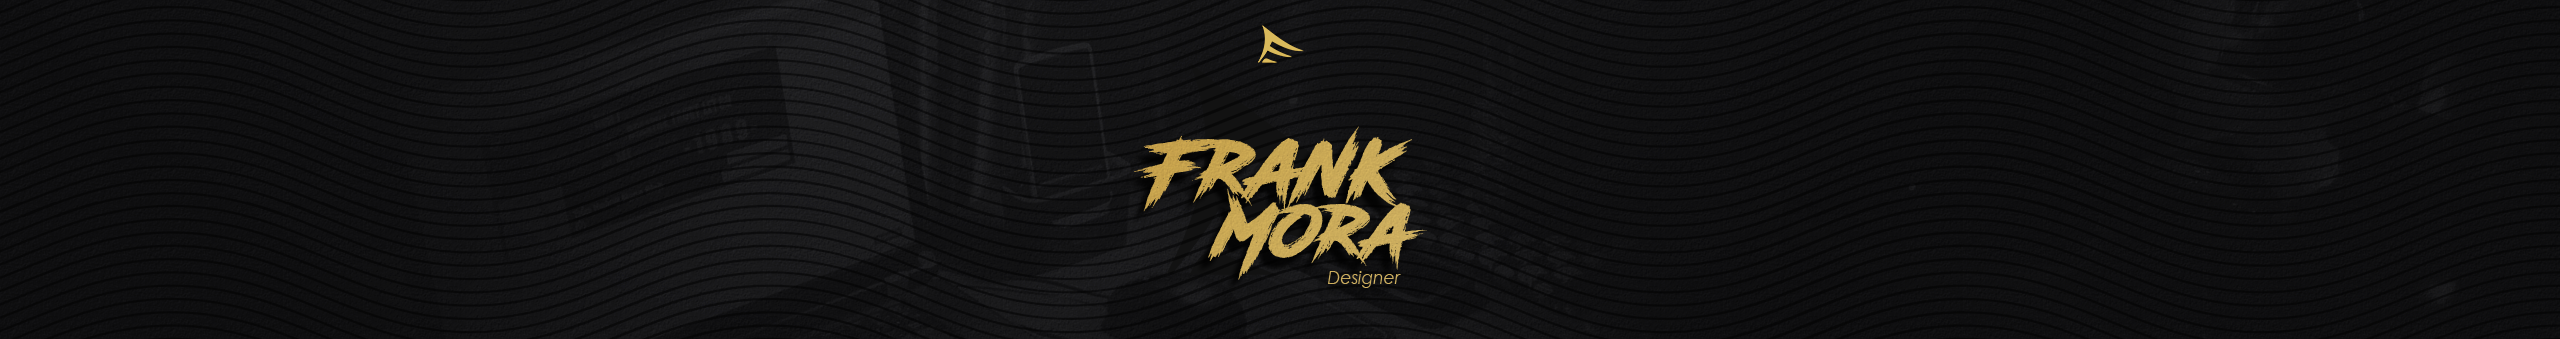 Baner profilu użytkownika Frank Mora